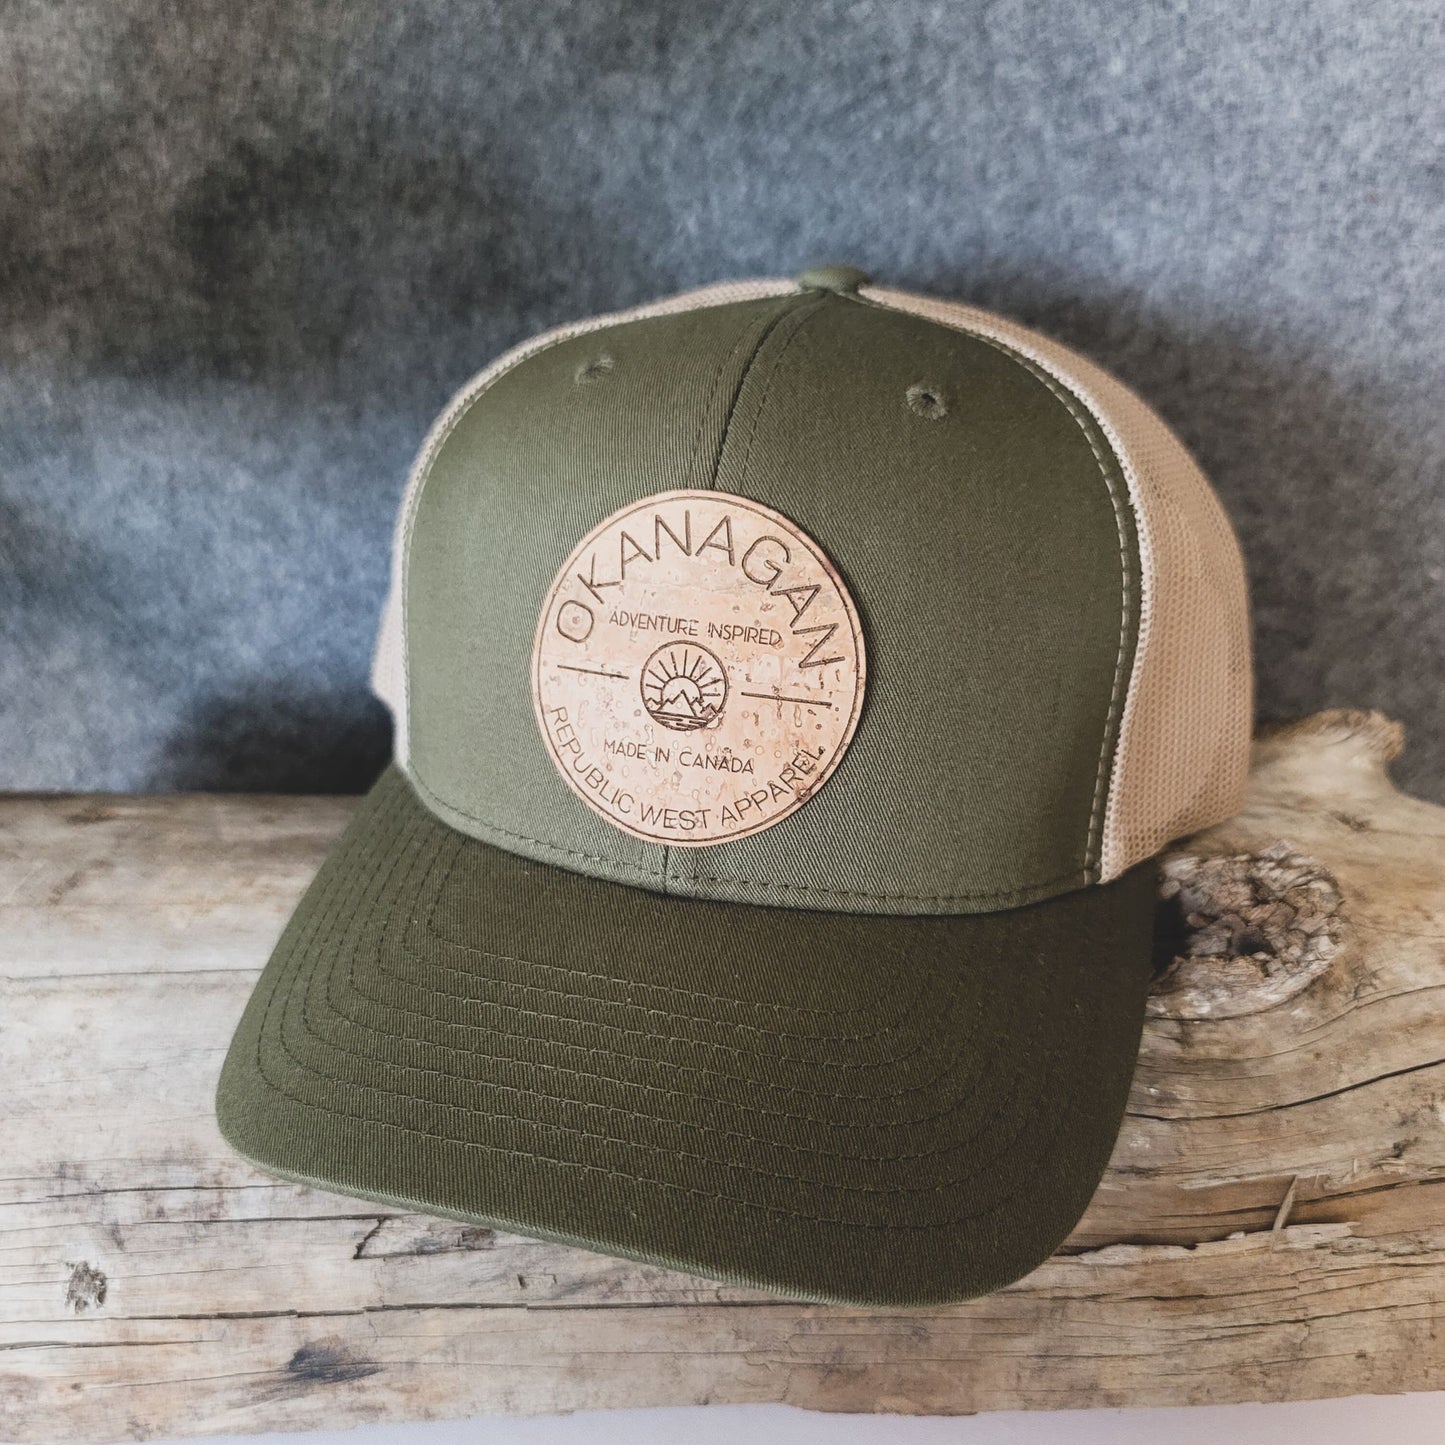 Okanagan Classic Cork Patch Trucker Hat - Khaki Green